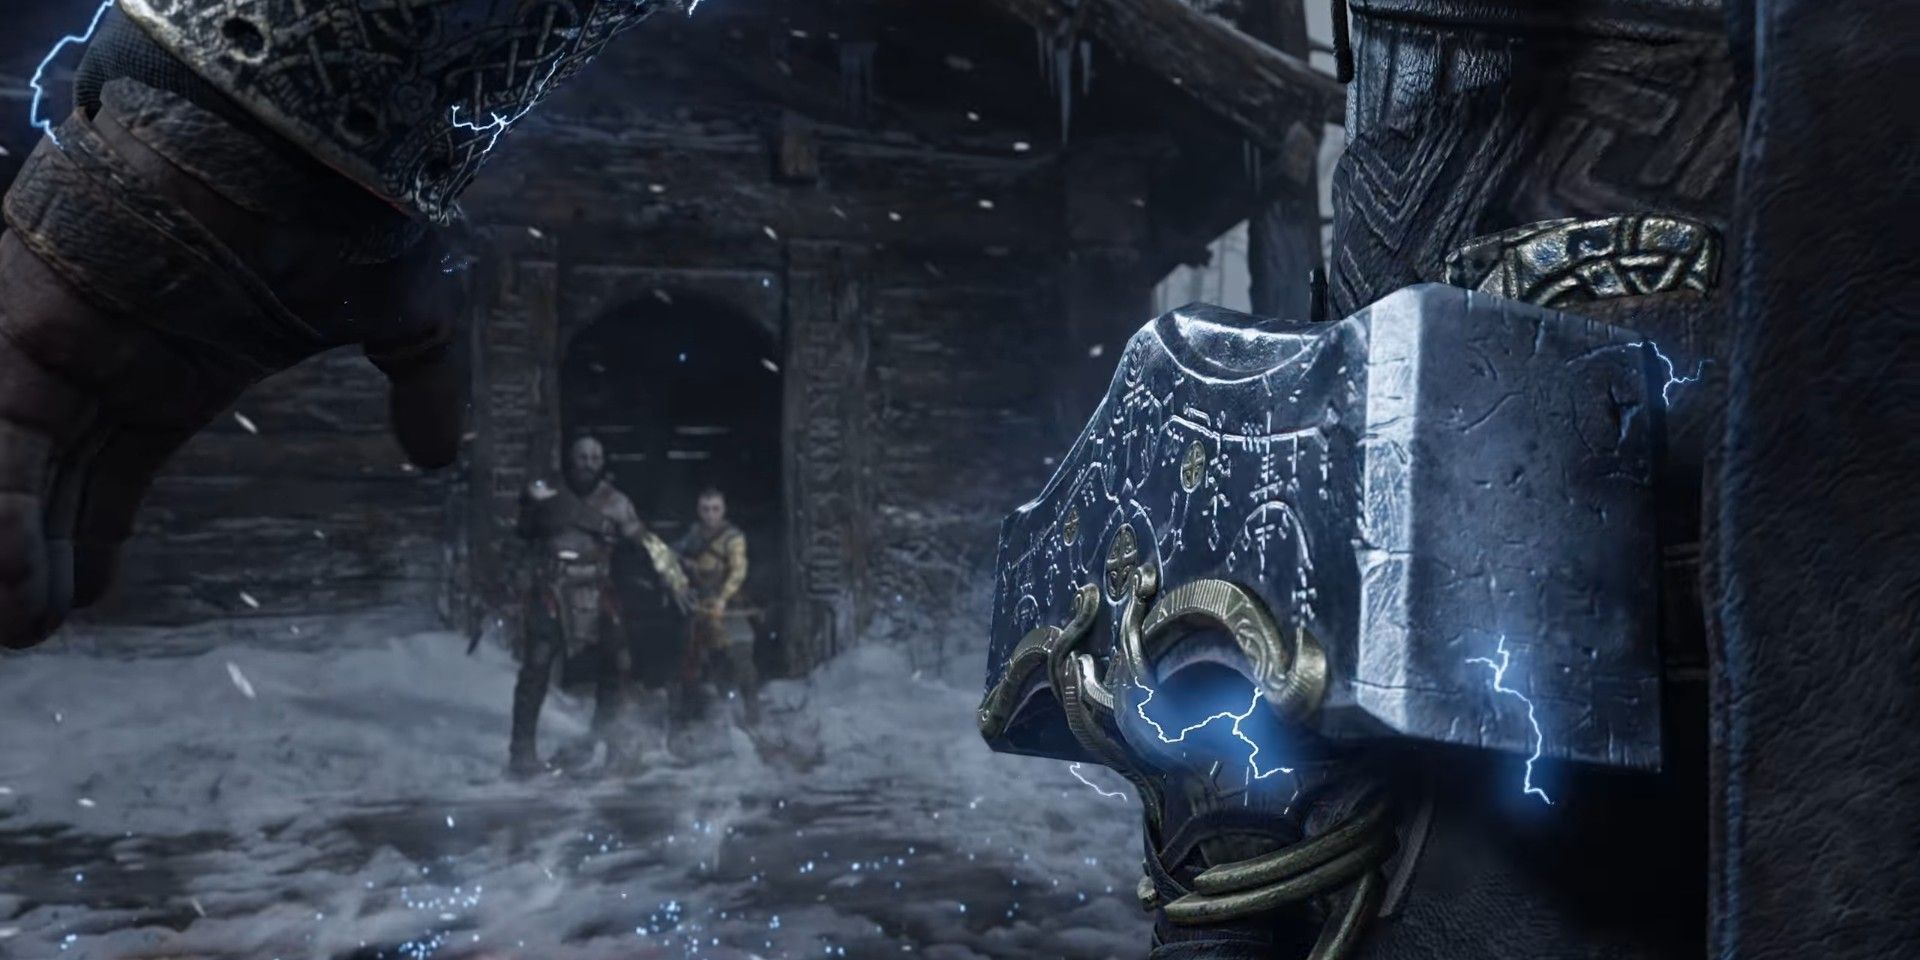 Thor God Of War Ragnarok Projects